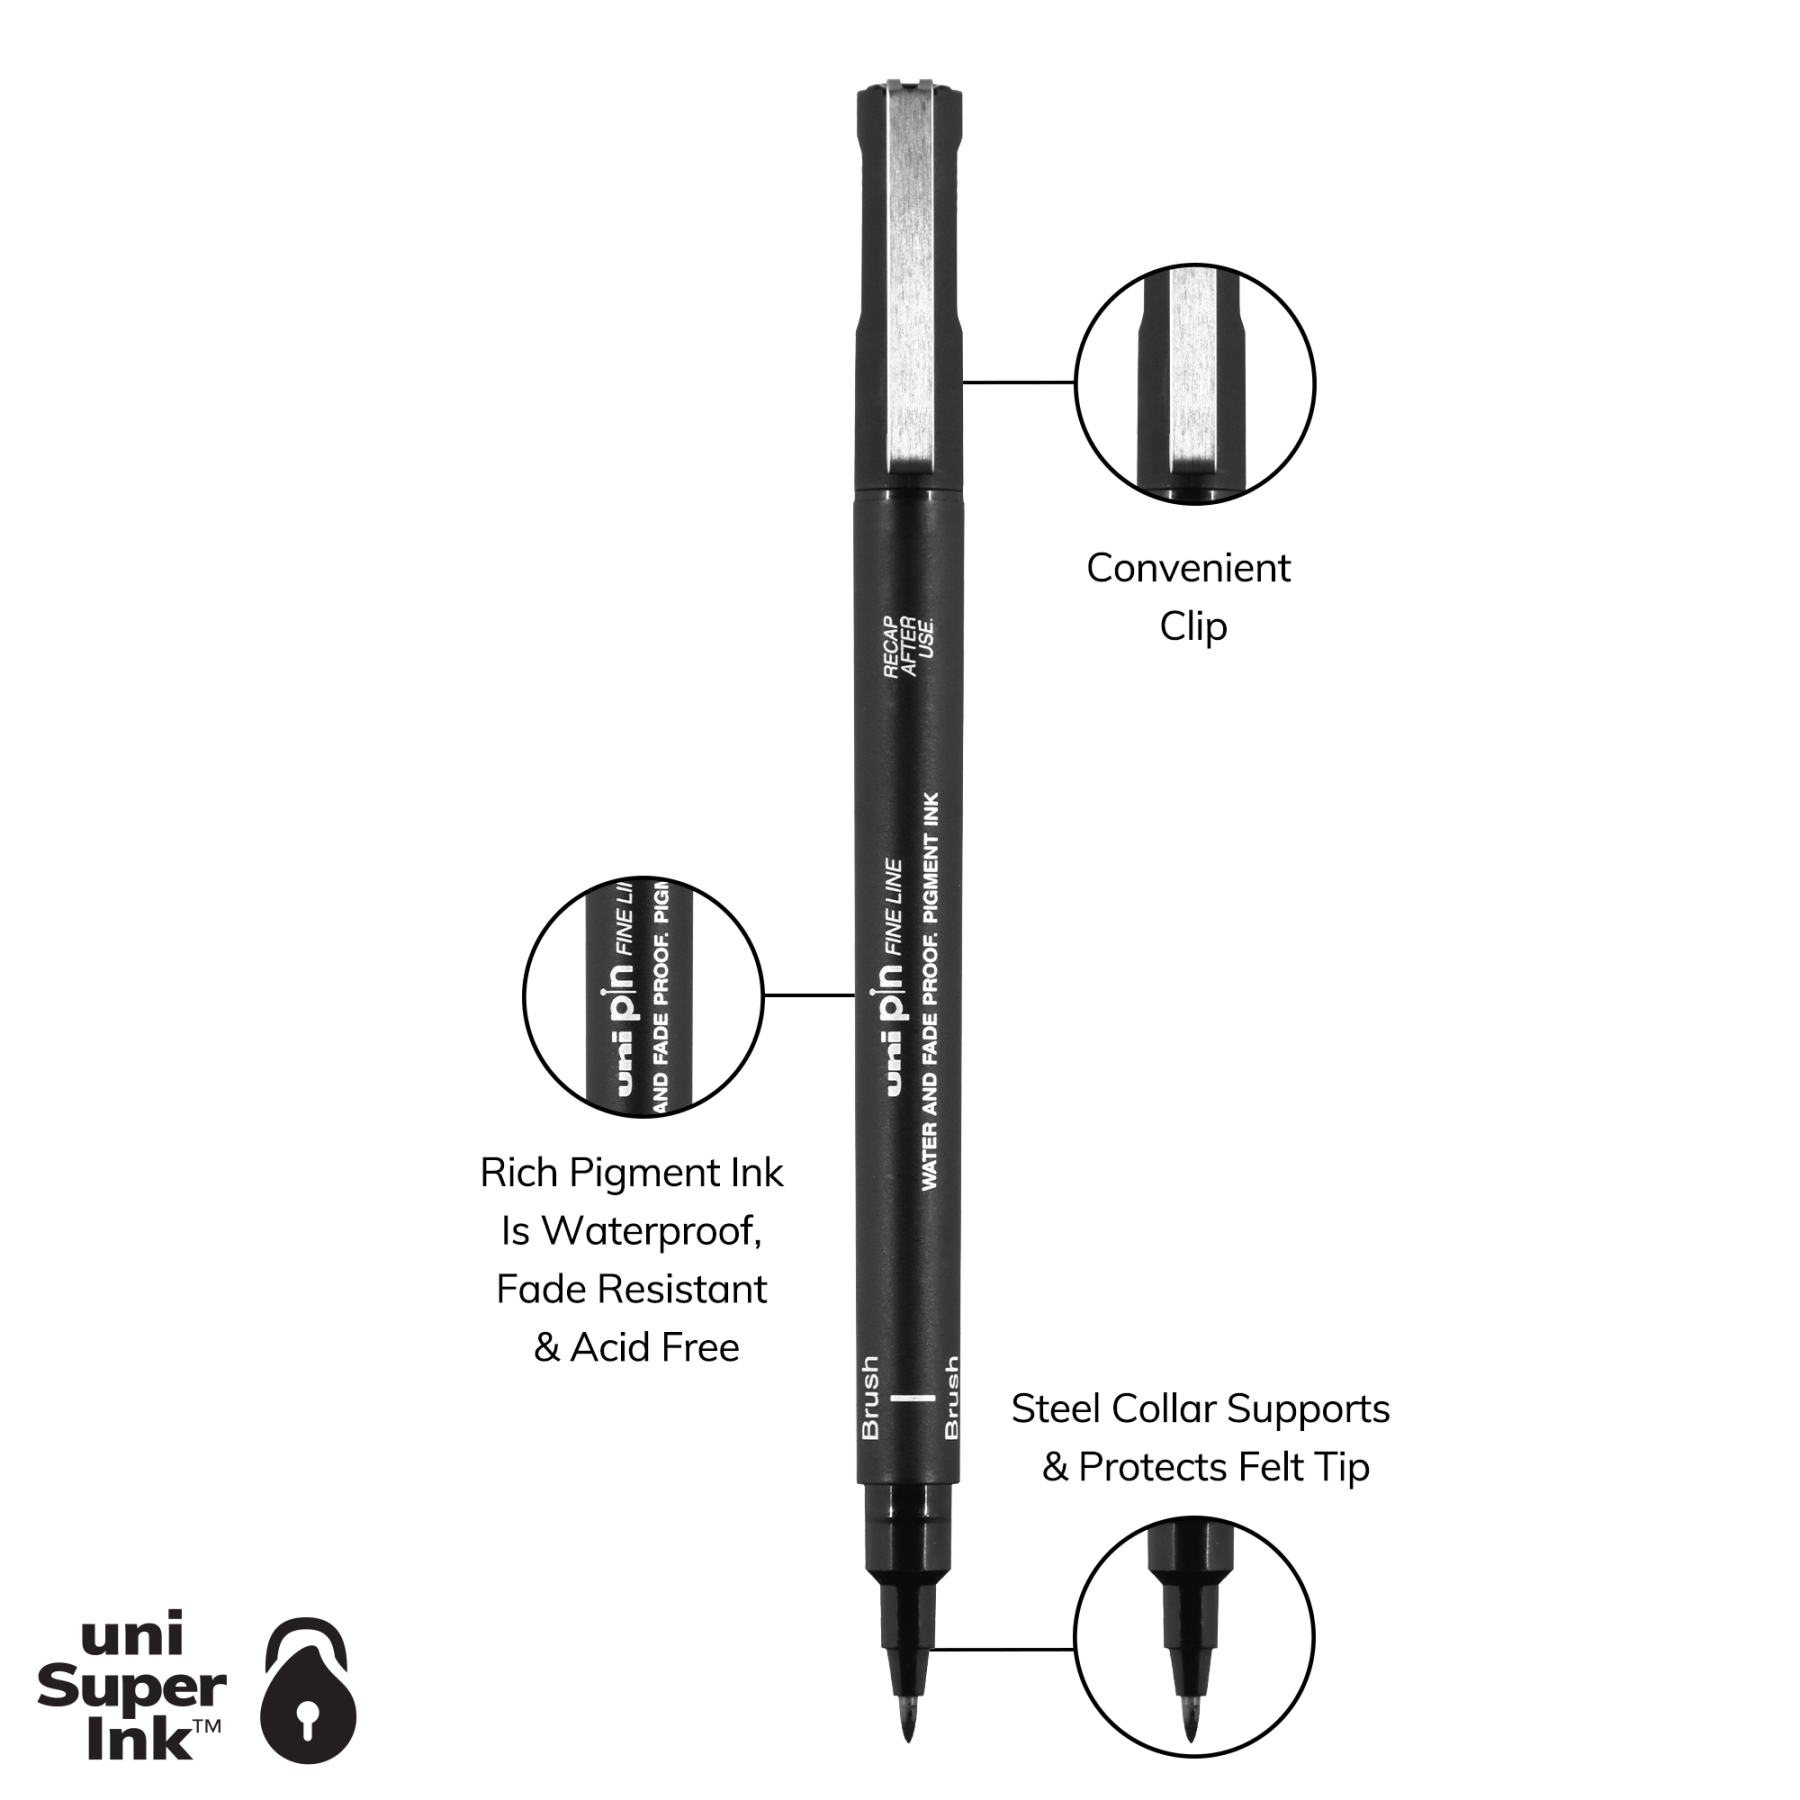 1/6PCS Uni Pin Fineliner Drawing Fine line Pens 005 01 02 03 05 08 SNO